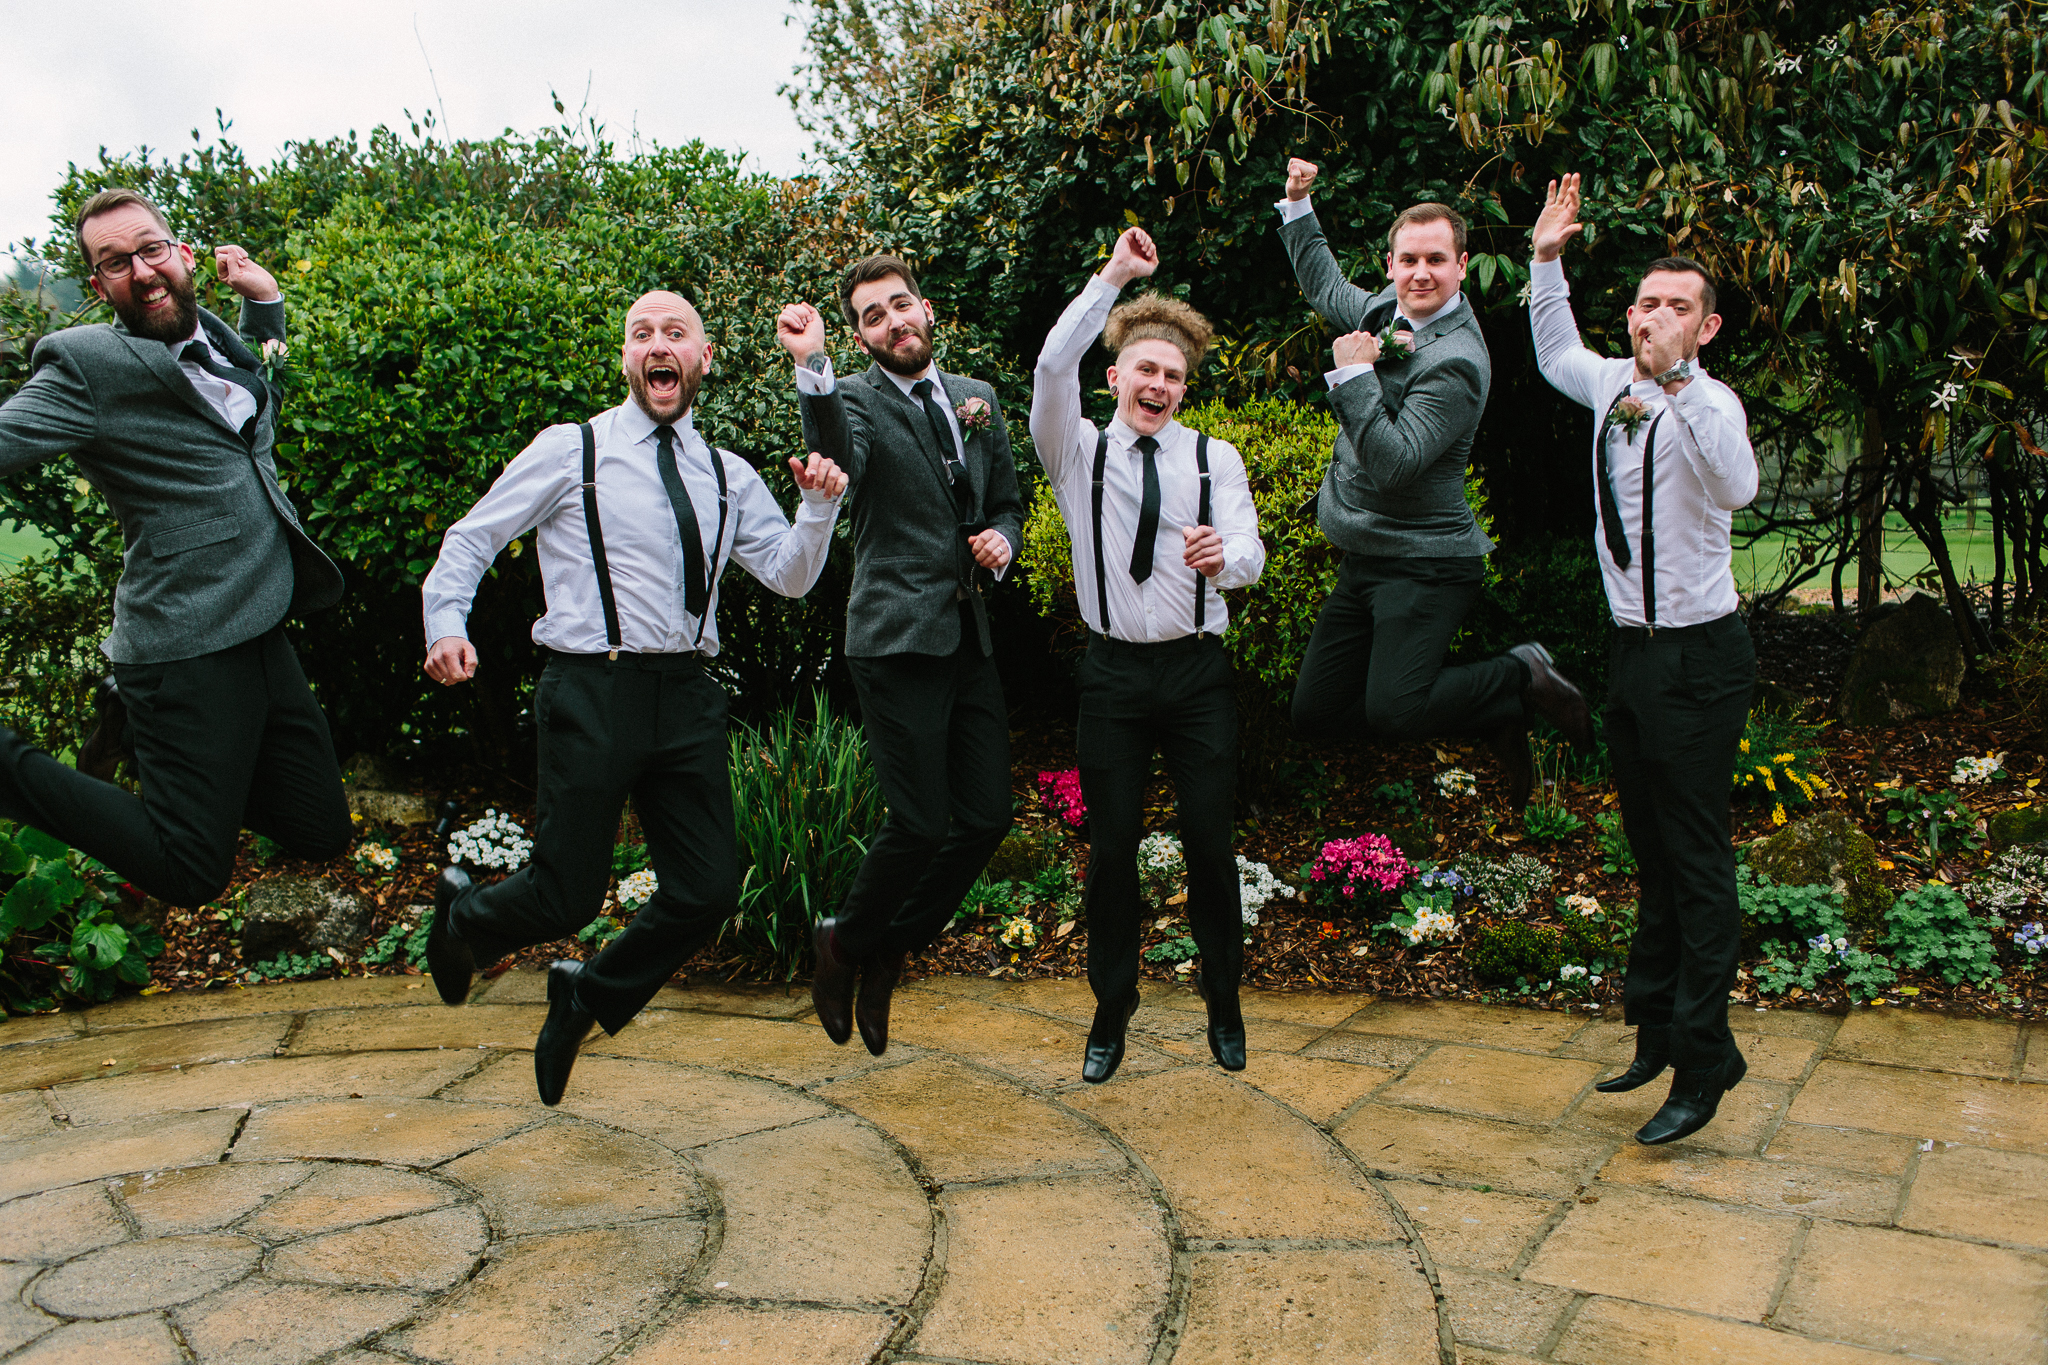 groomsmen jump